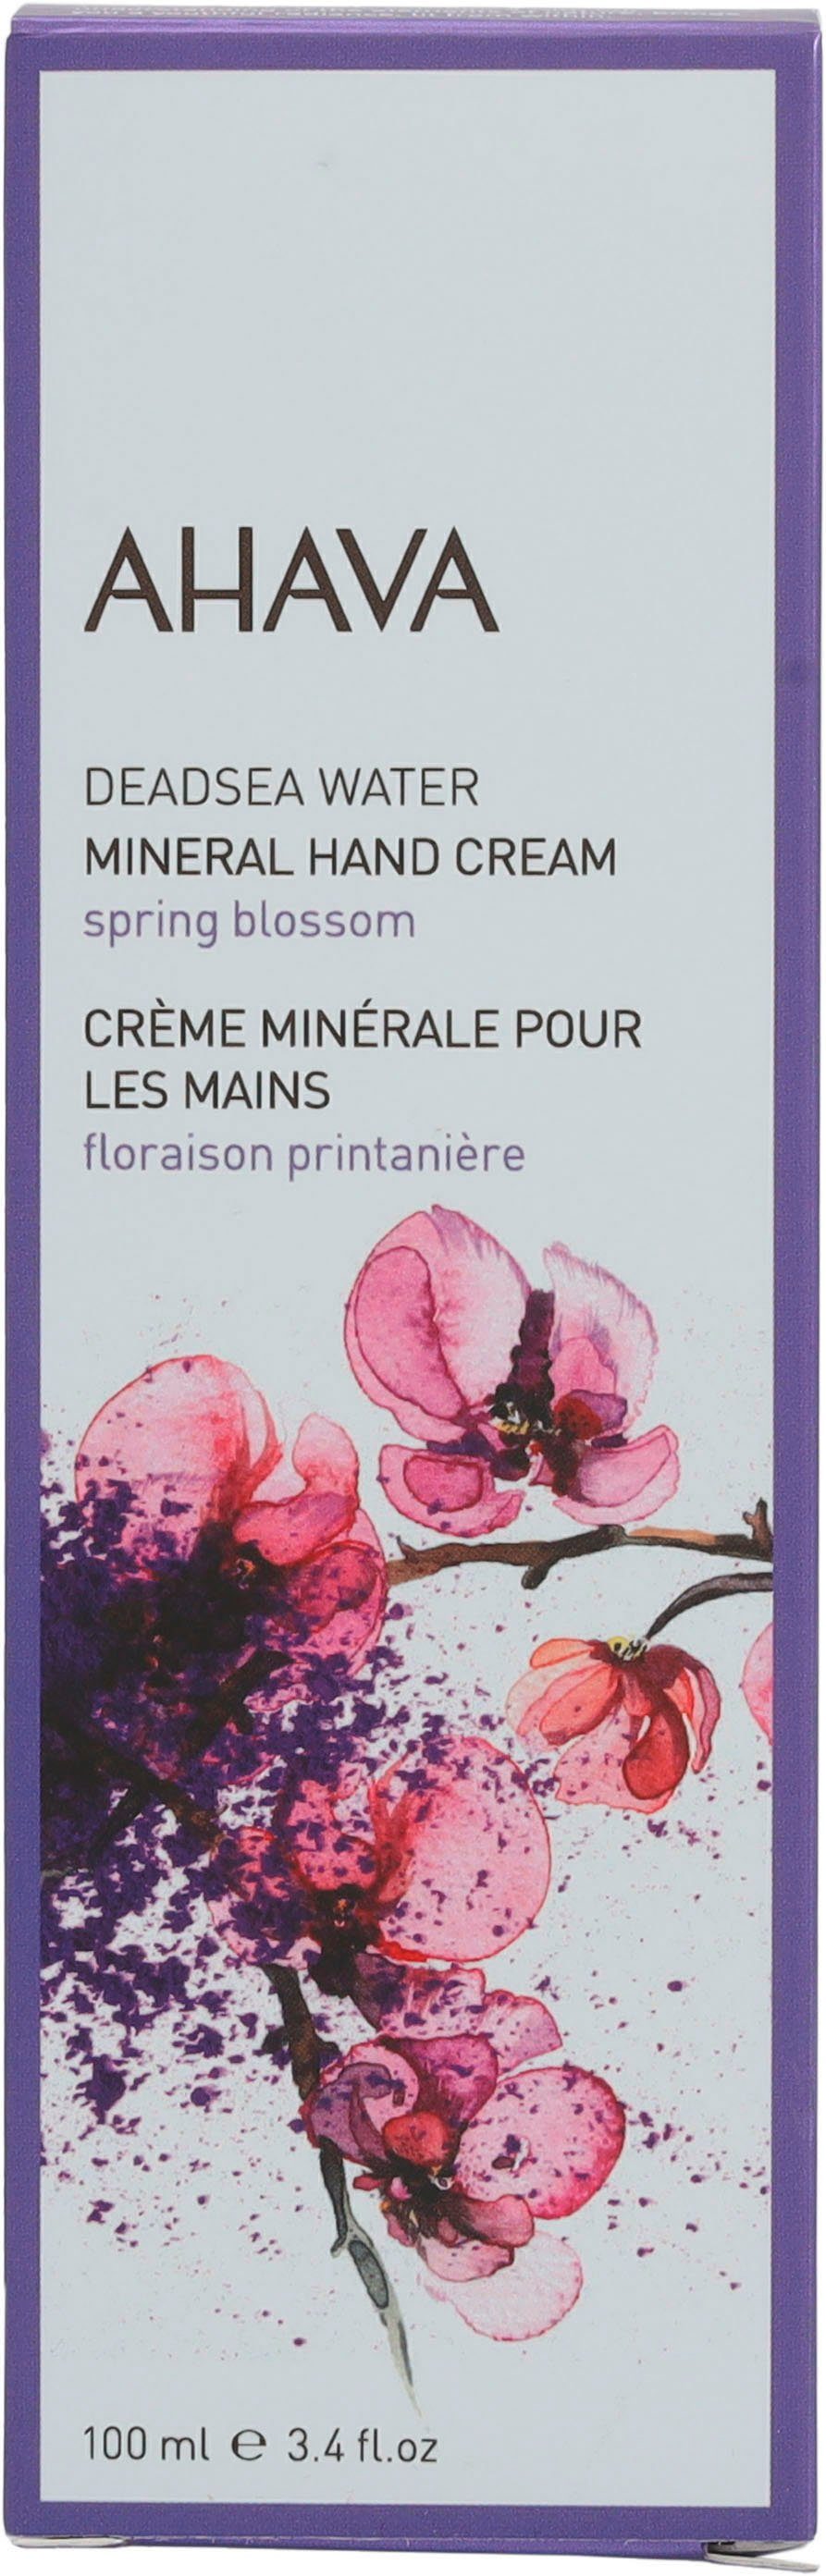 Hand Blossom Spring AHAVA Cream Handcreme Deadsea Water Mineral